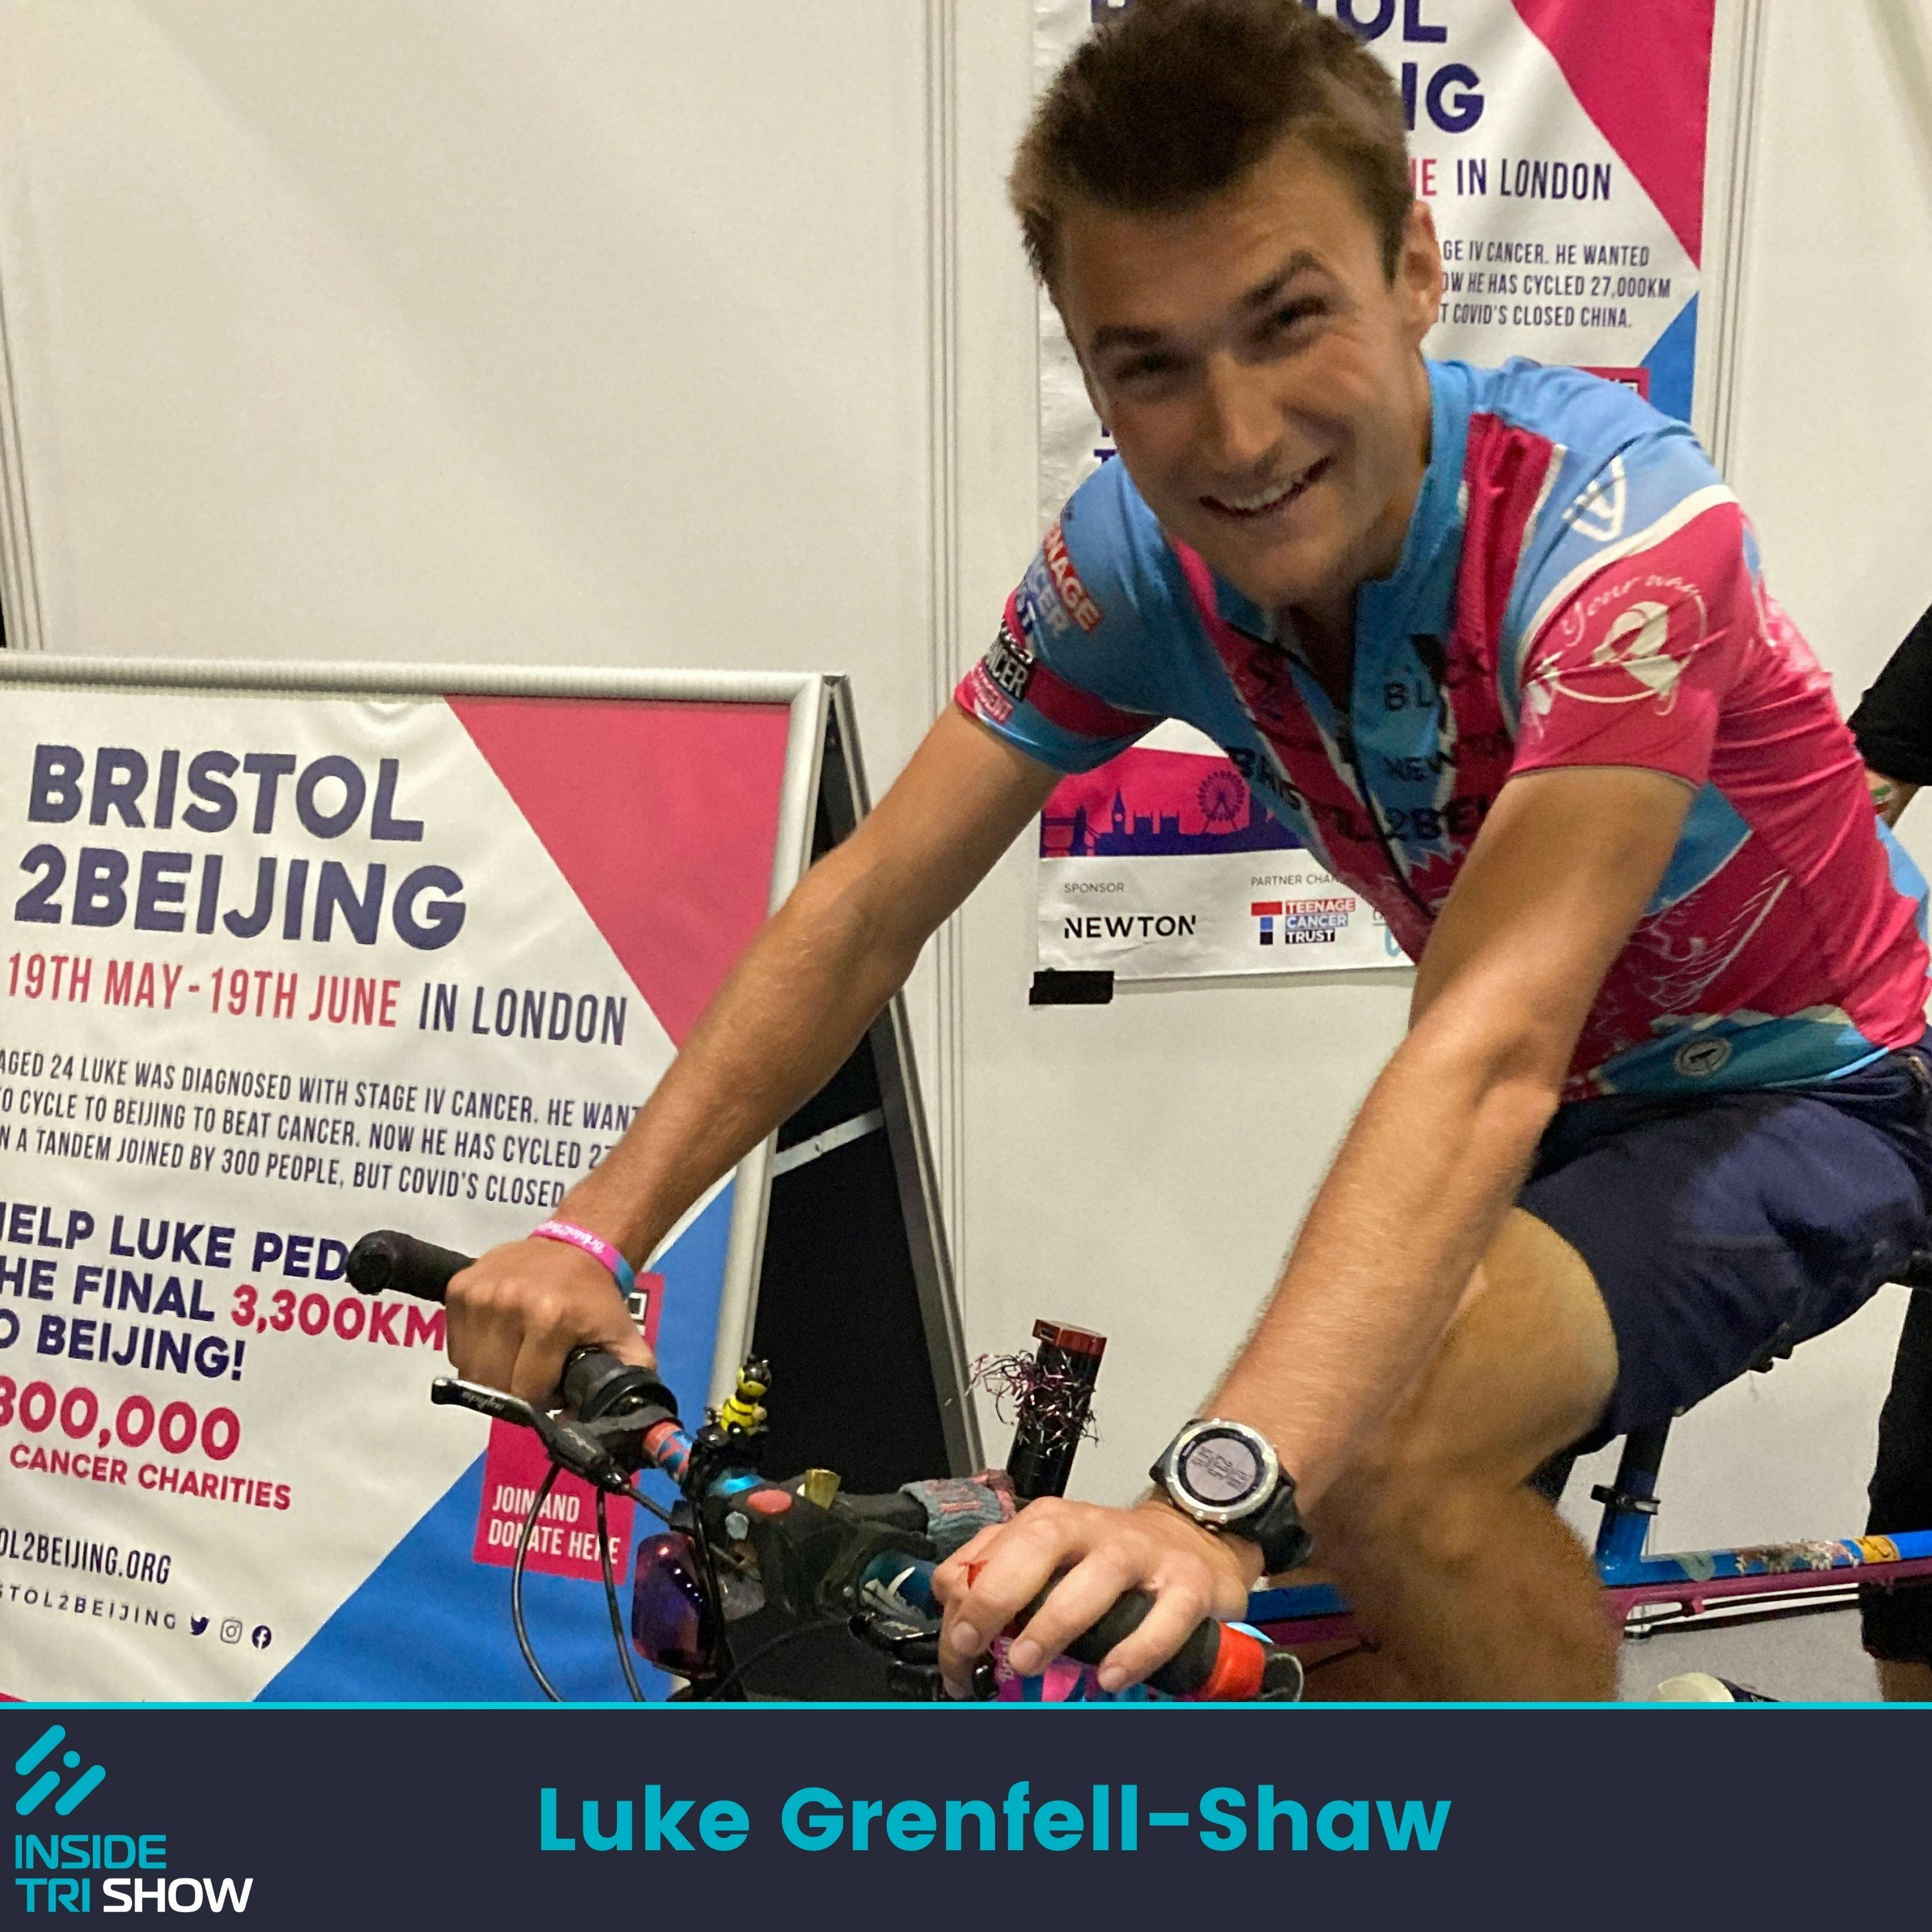 Luke Grenfell-Shaw: Responding to life's challenges through Bristol 2 Beijing